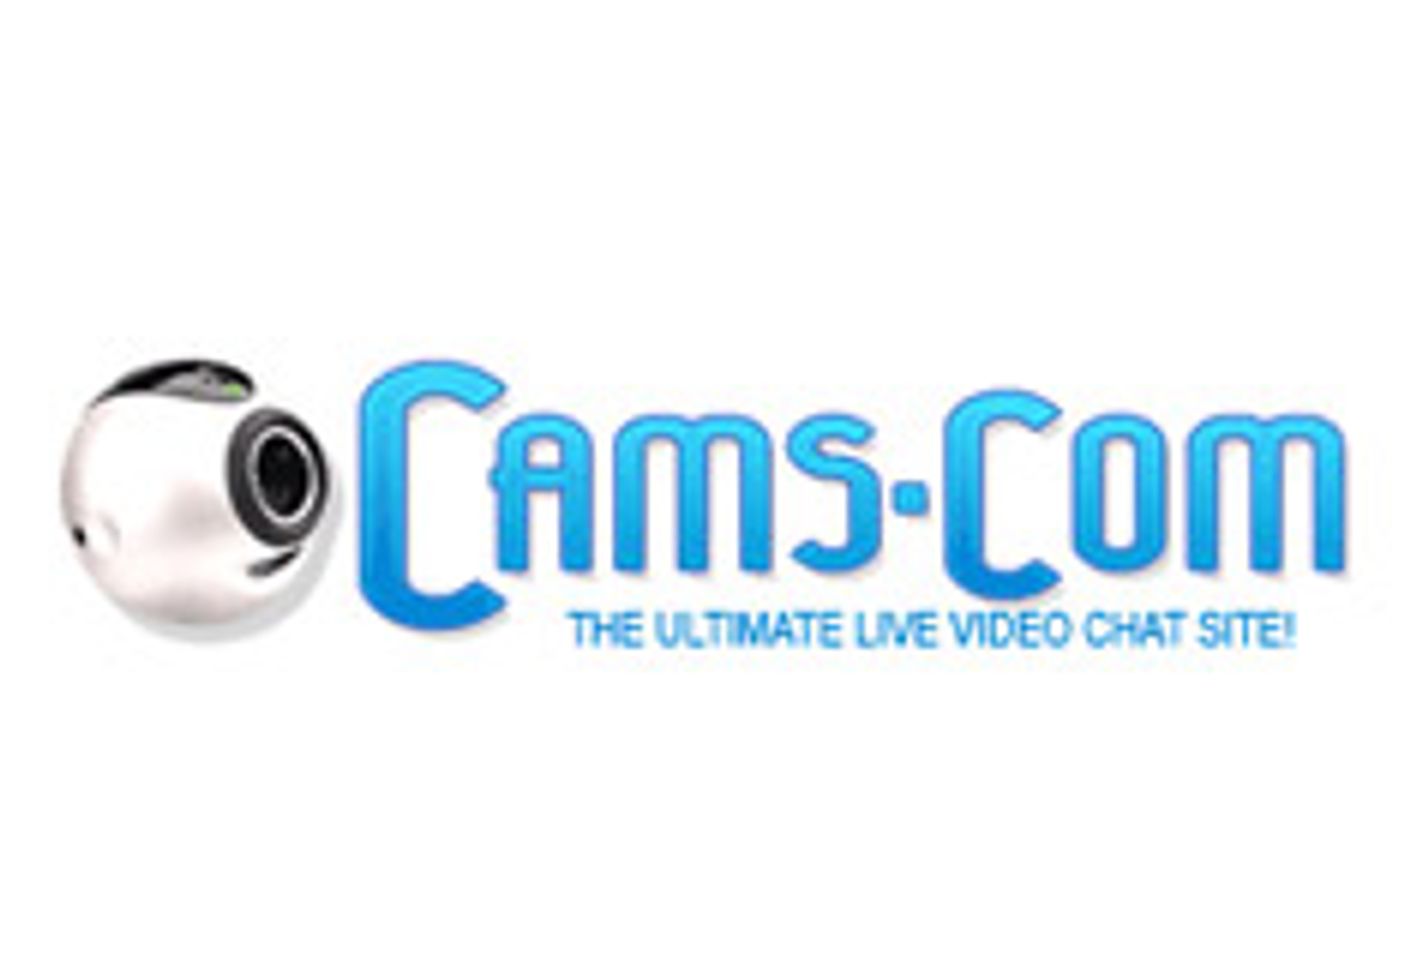 Cams.com Goes Both Ways